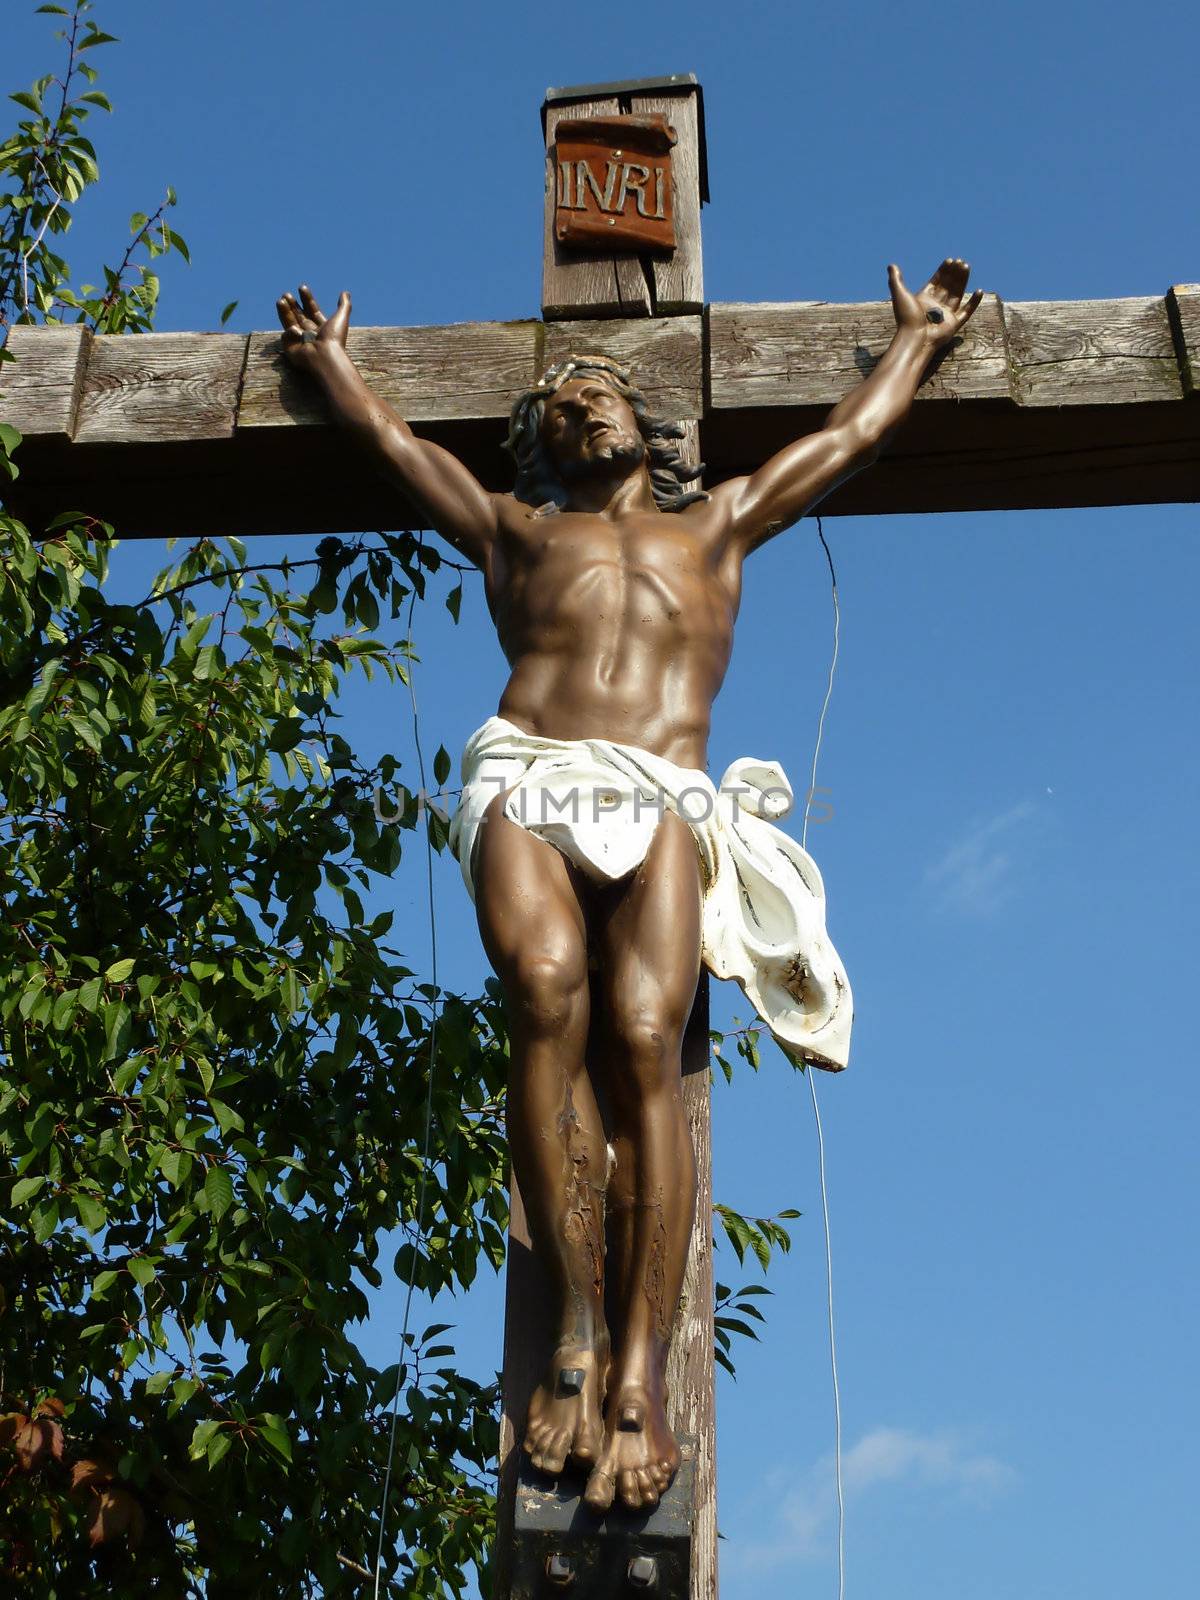 Jesus on the cross by Elenaphotos21